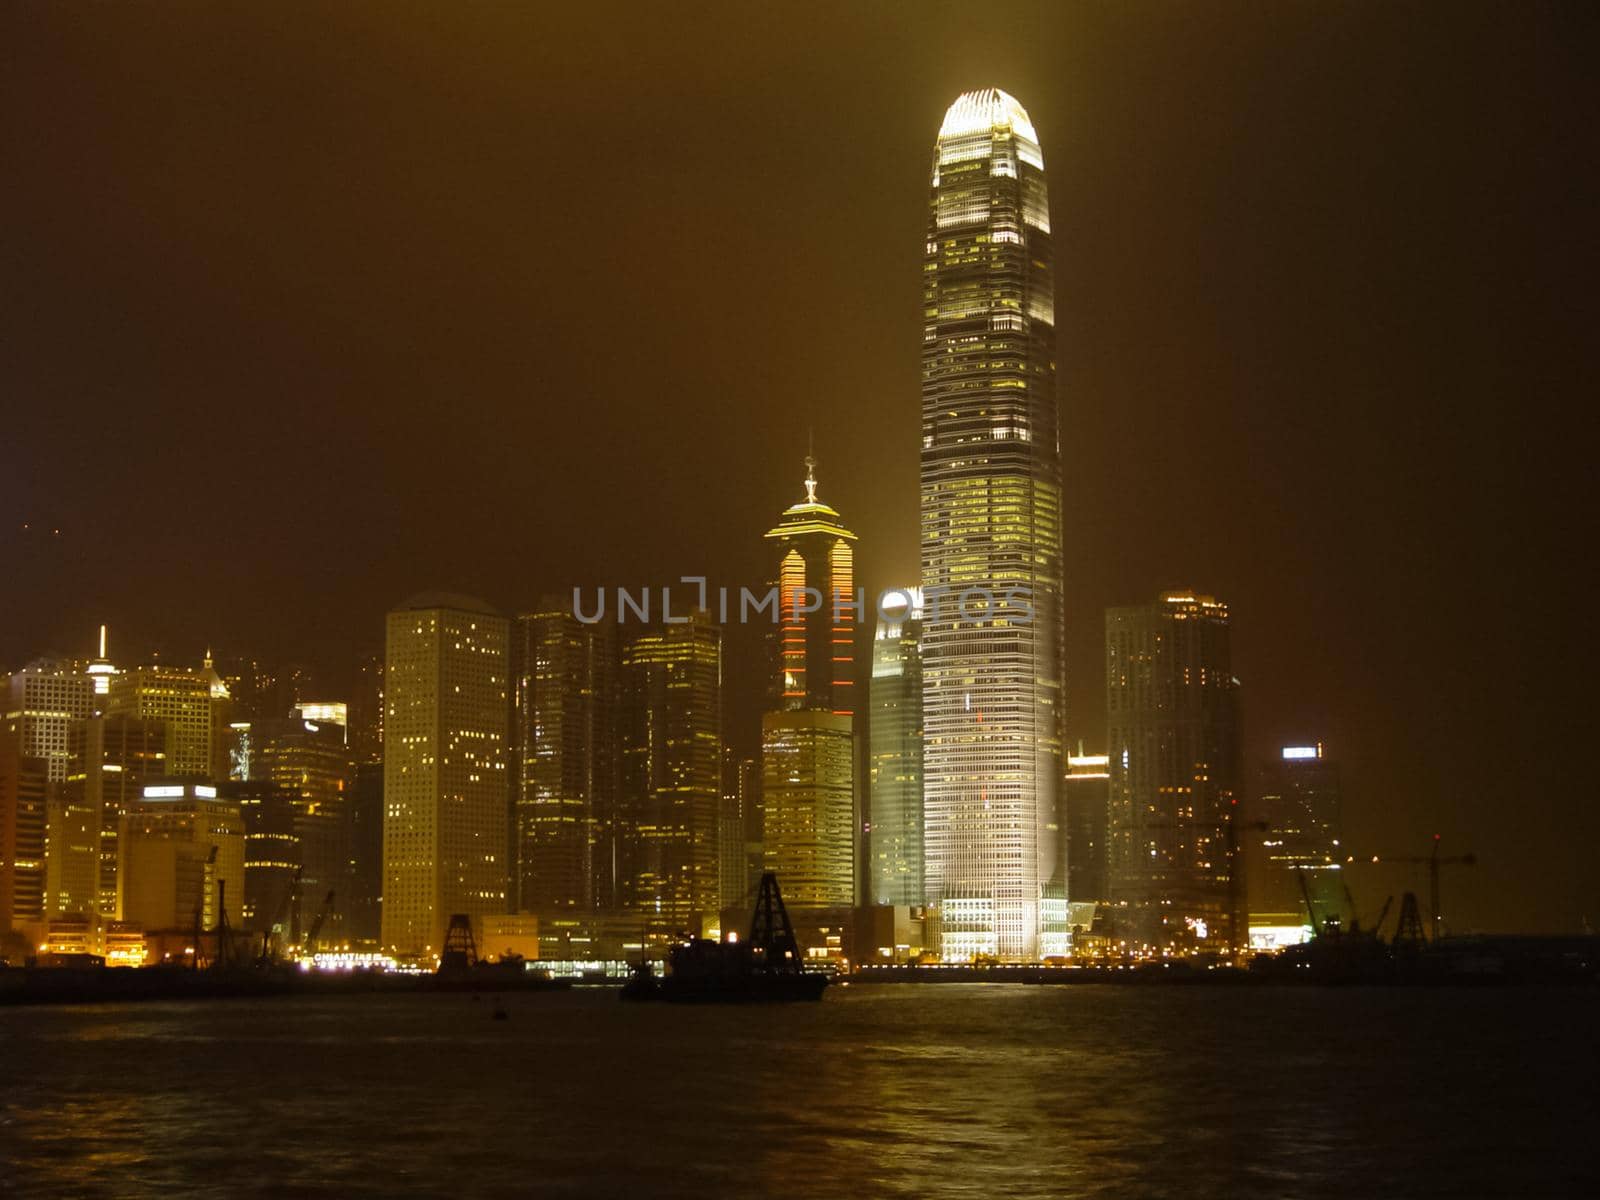 Night metropolis in lights. Hong Kong night. by DePo